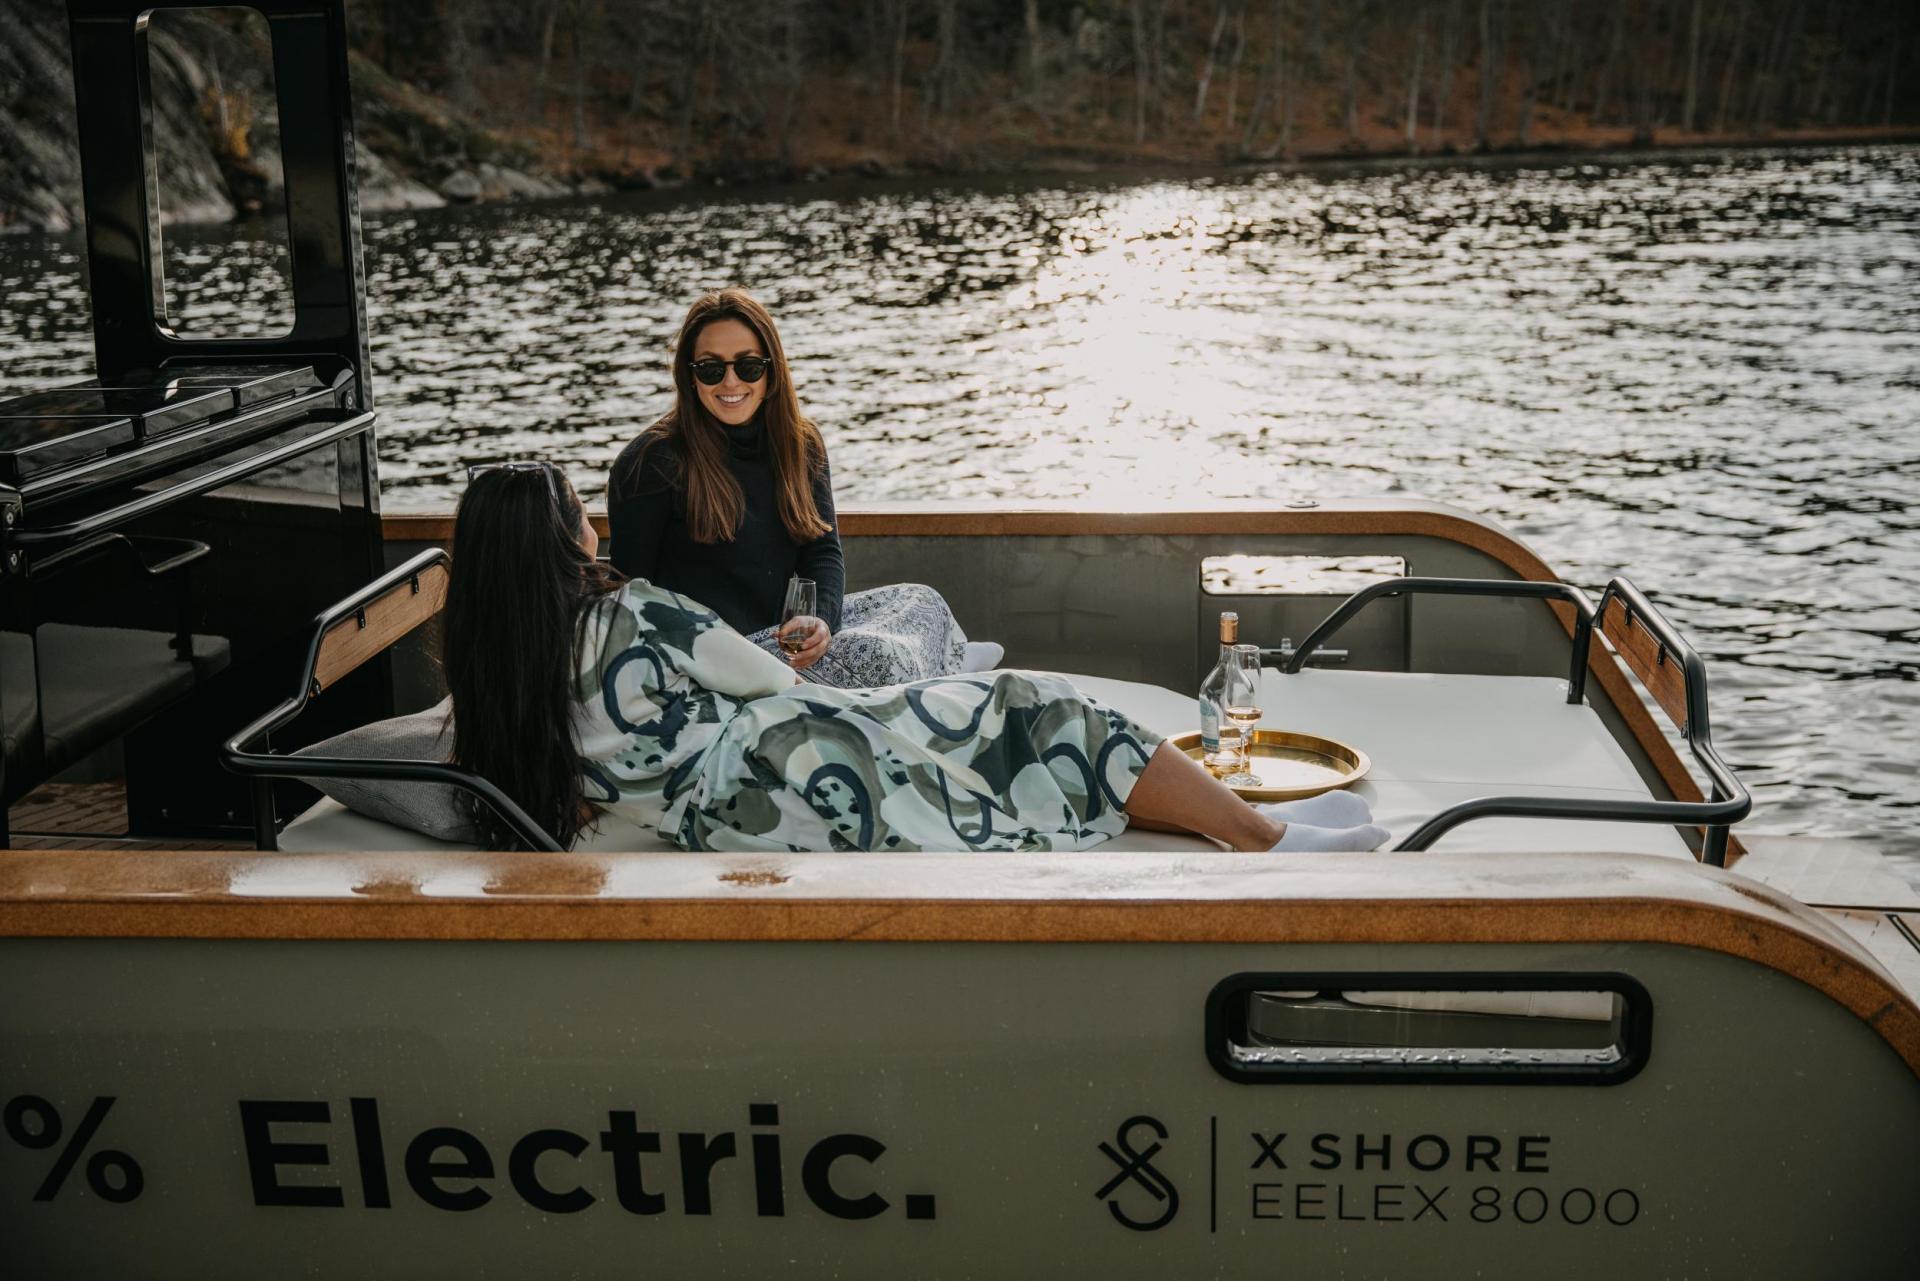 Motorboats X Shore Eelex 8000 2021 exterieur 18